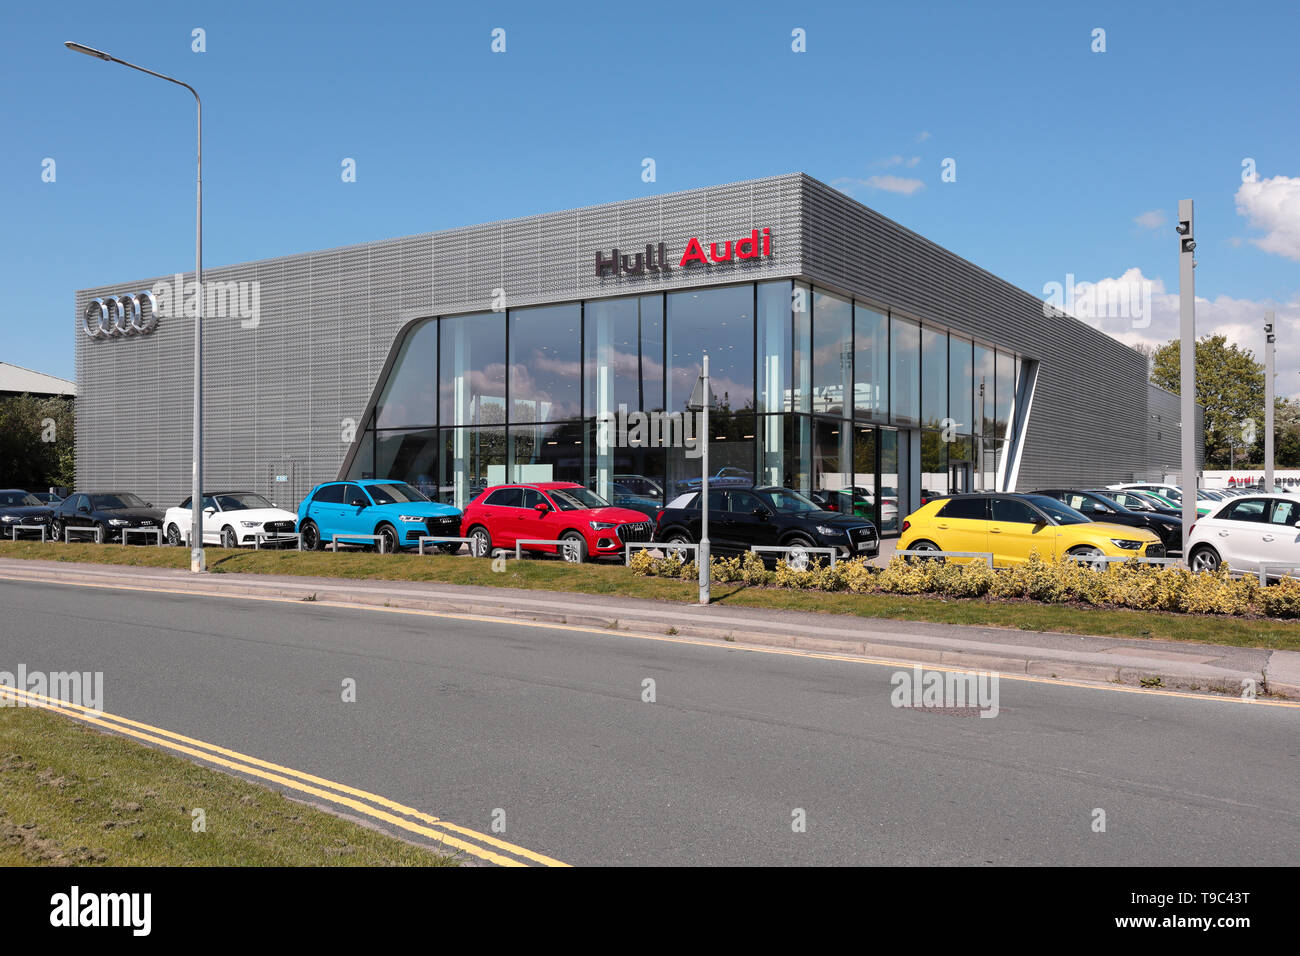 Rumpf Audi Dealership Showroom gegen einen klaren blauen Himmel Stockfoto